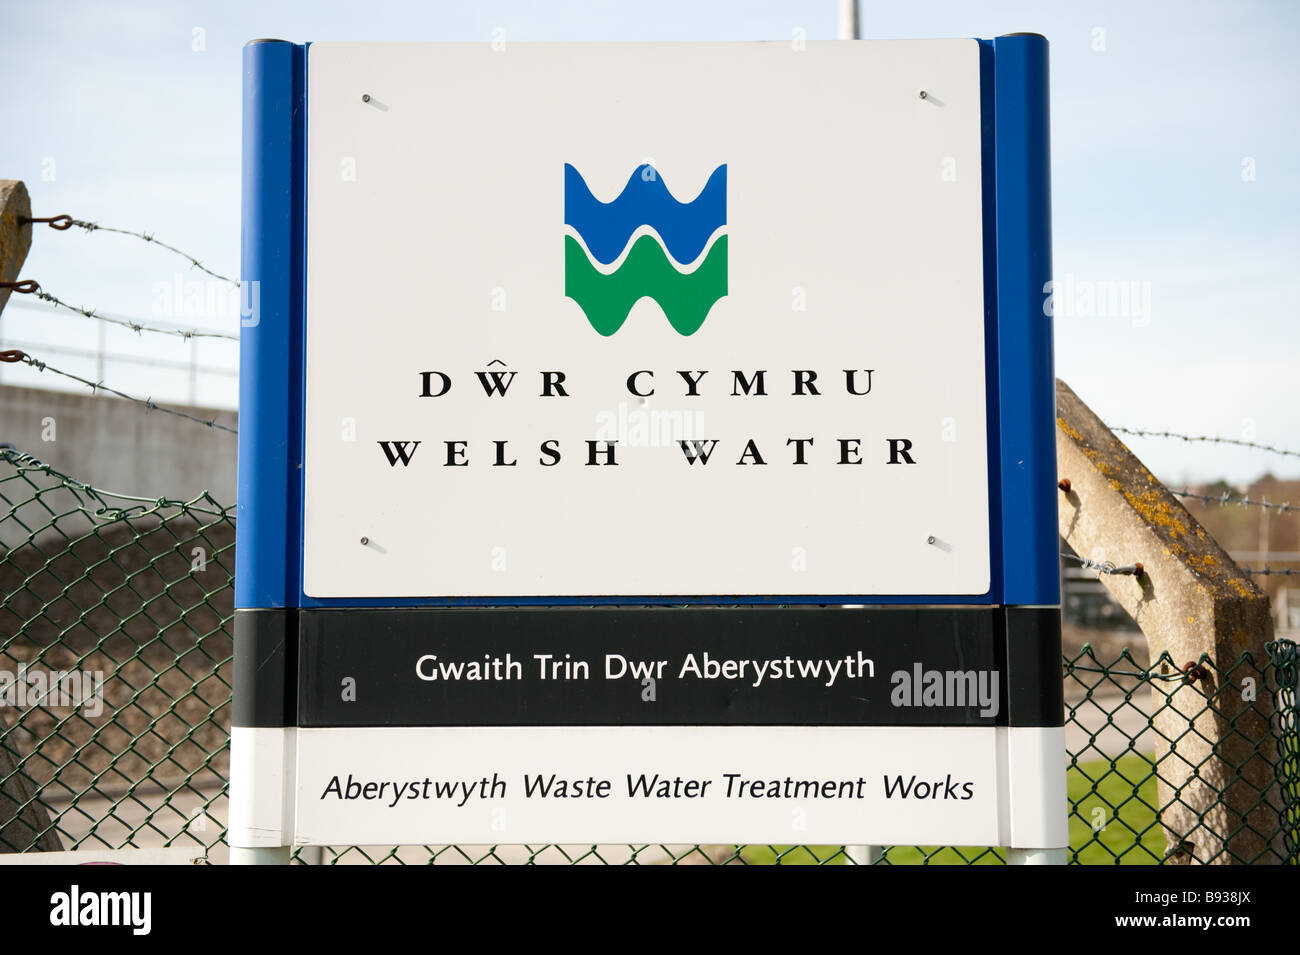 A bilingual welsh english  Welsh Water Dwr Cymru sign at Aberystwyth waste water treatment works, Wales UK Stock Photo